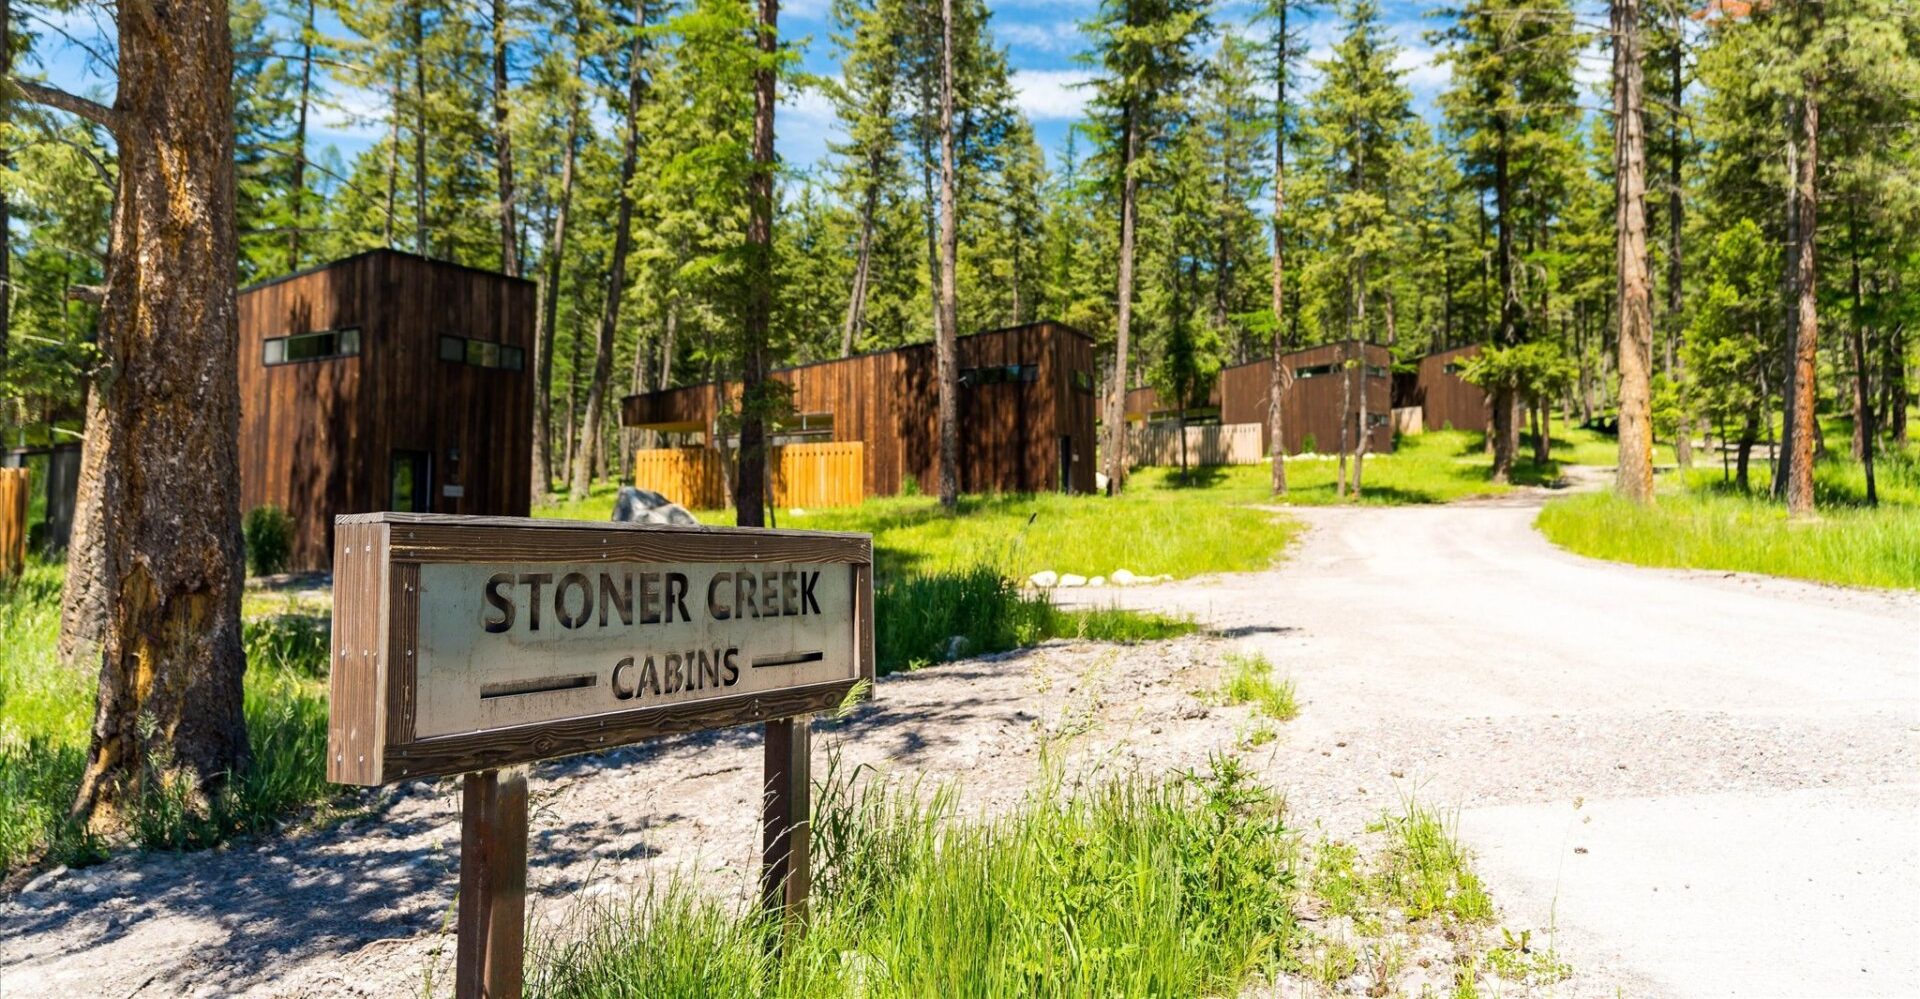 Stoner Creek Cabins